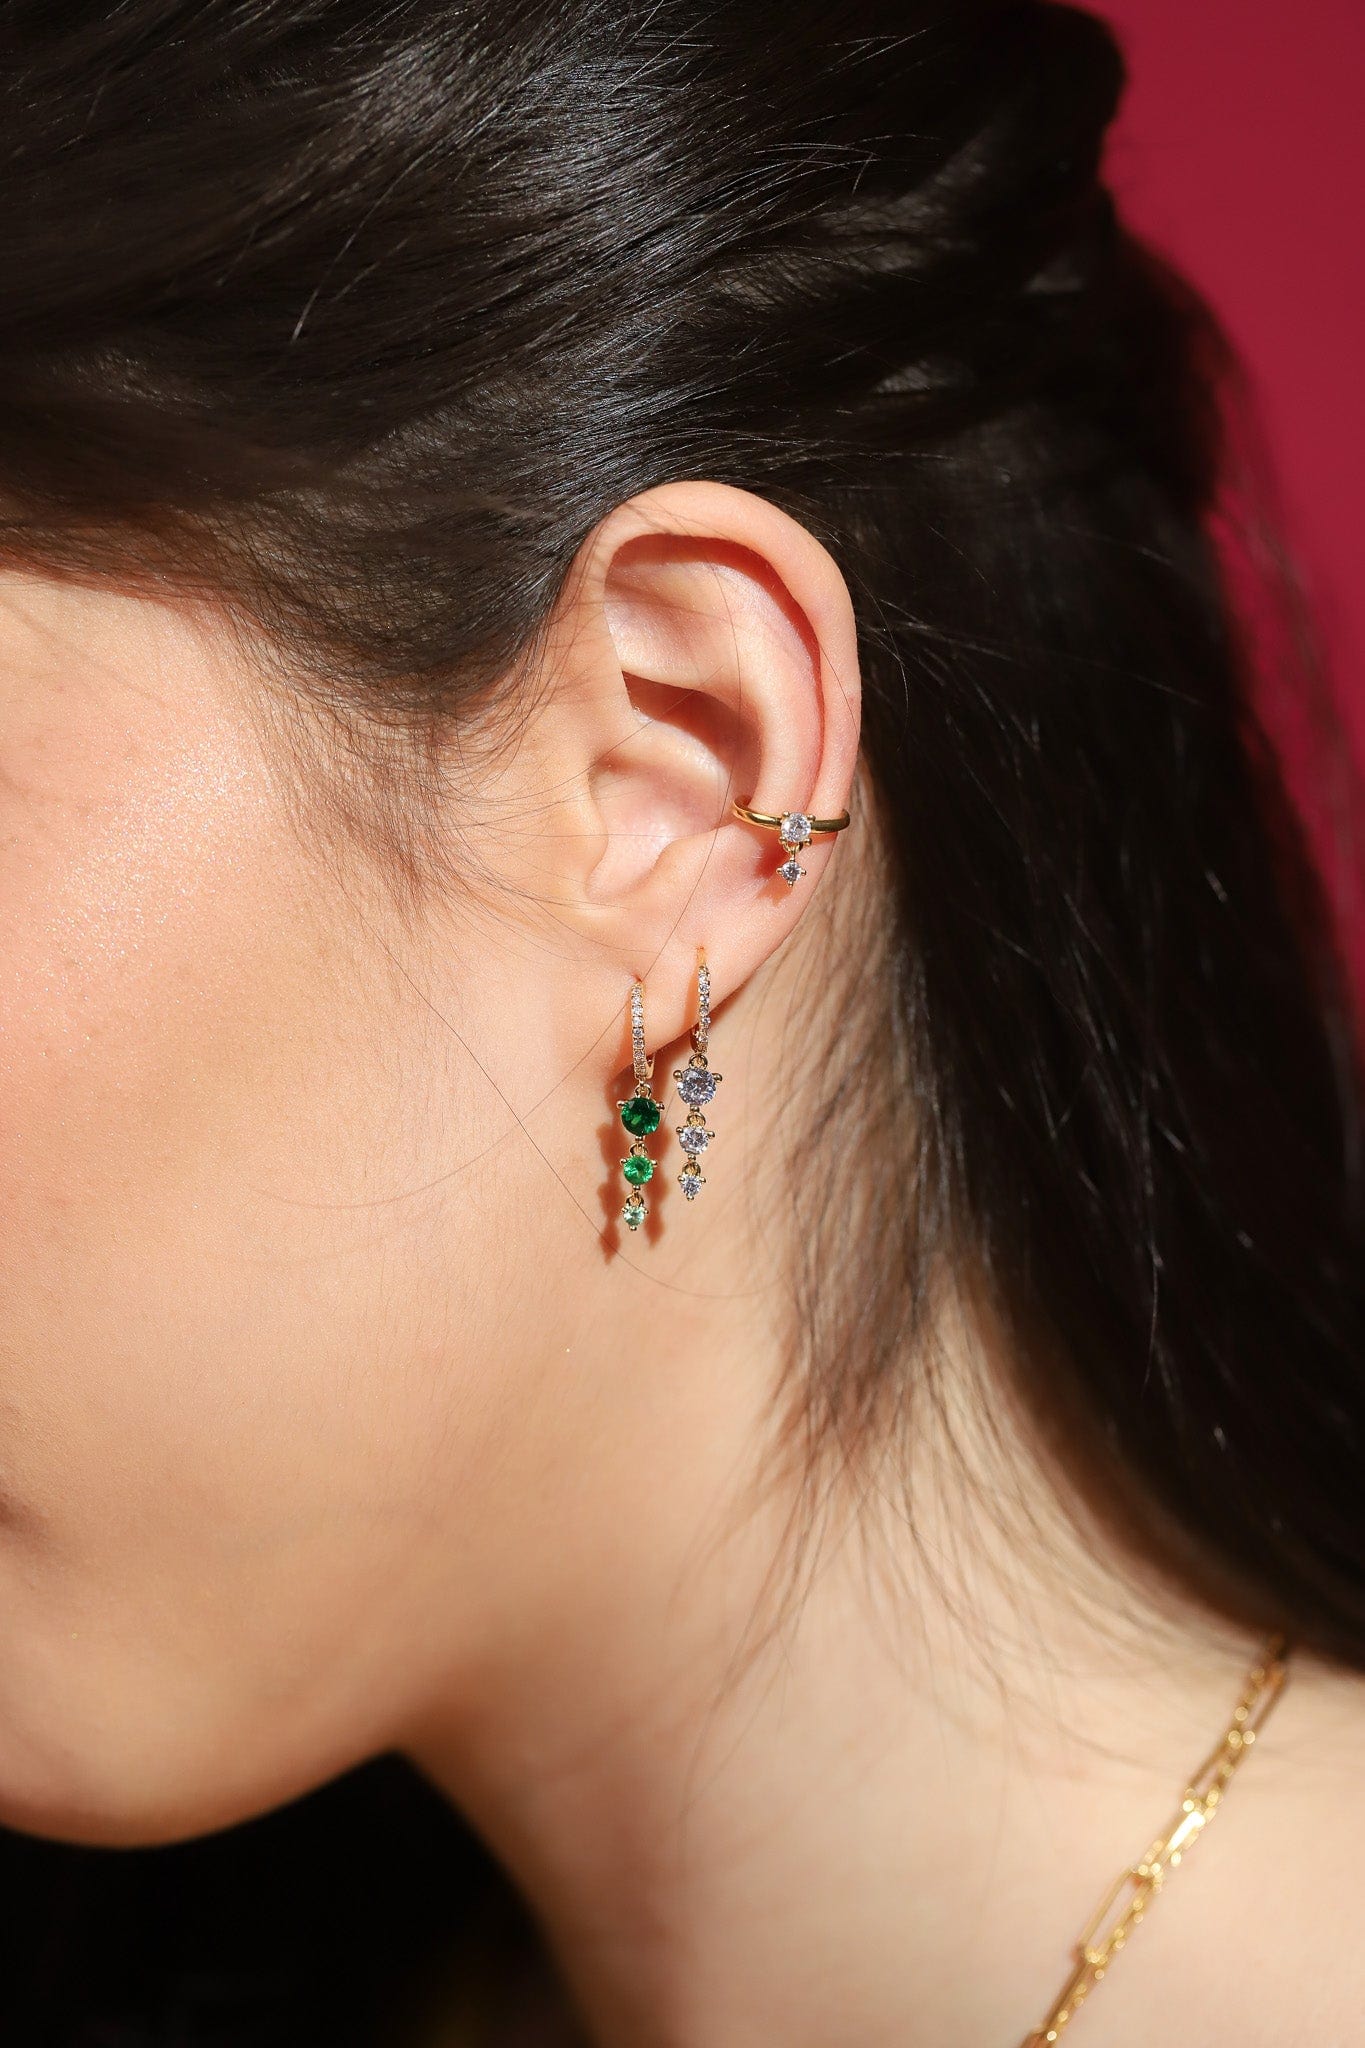 TAI JEWELRY Earrings Pave Huggie With Glass Stone Dangles